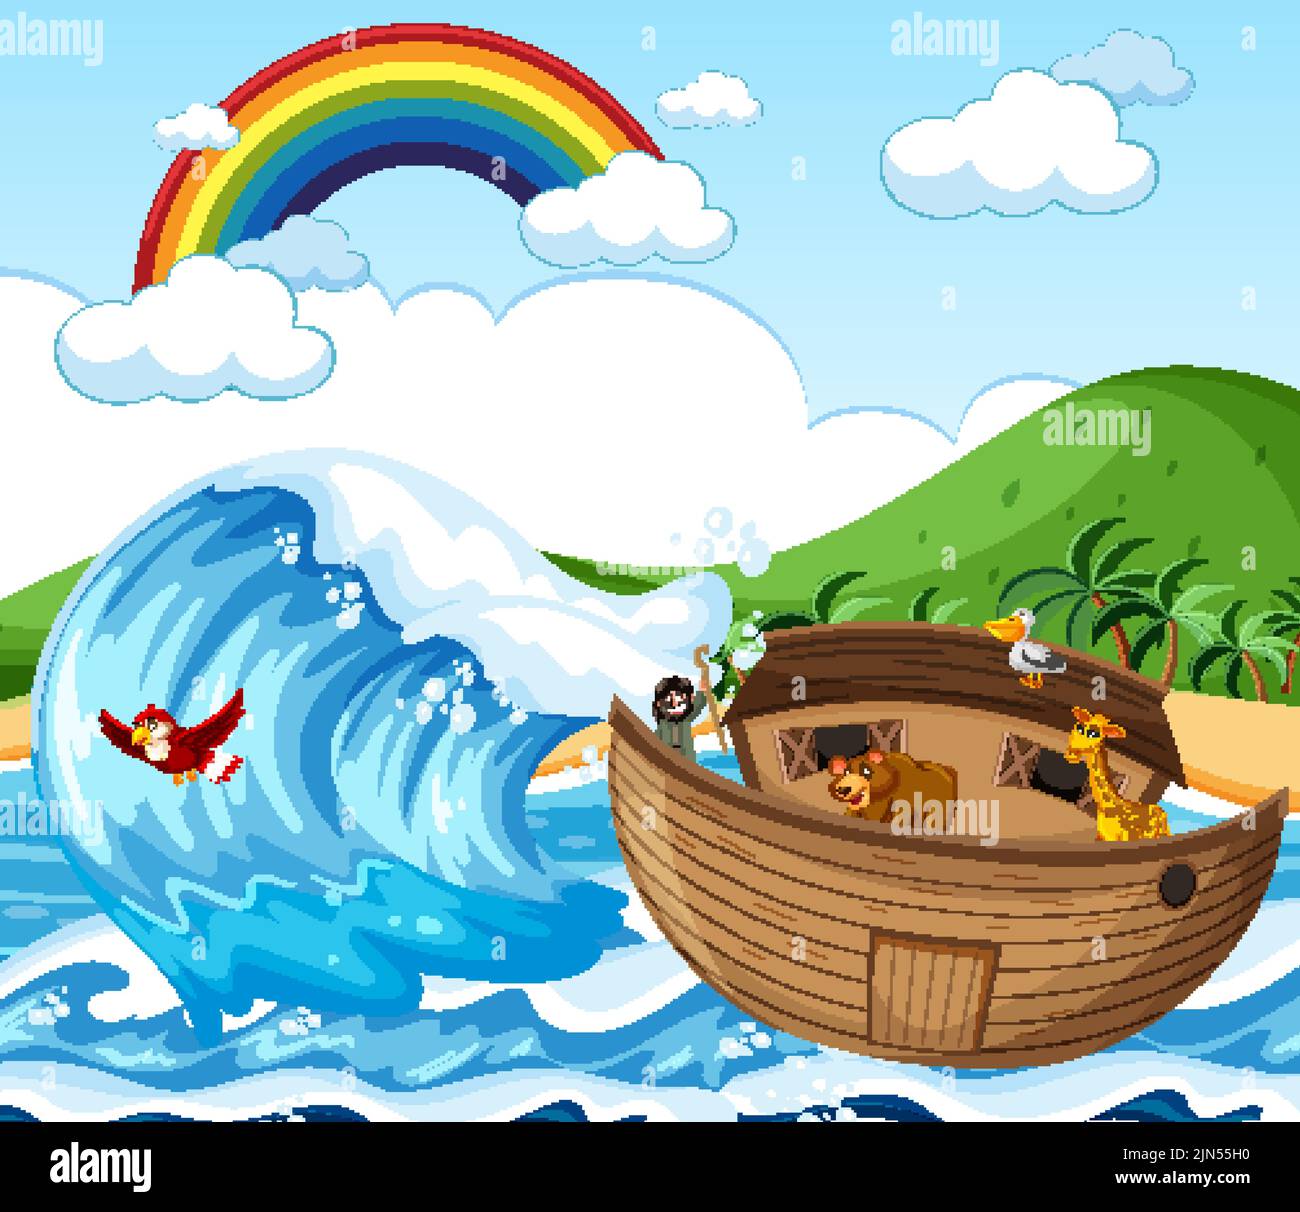 Noah's Ark with wild animals in nature scene illustration Stock Vector